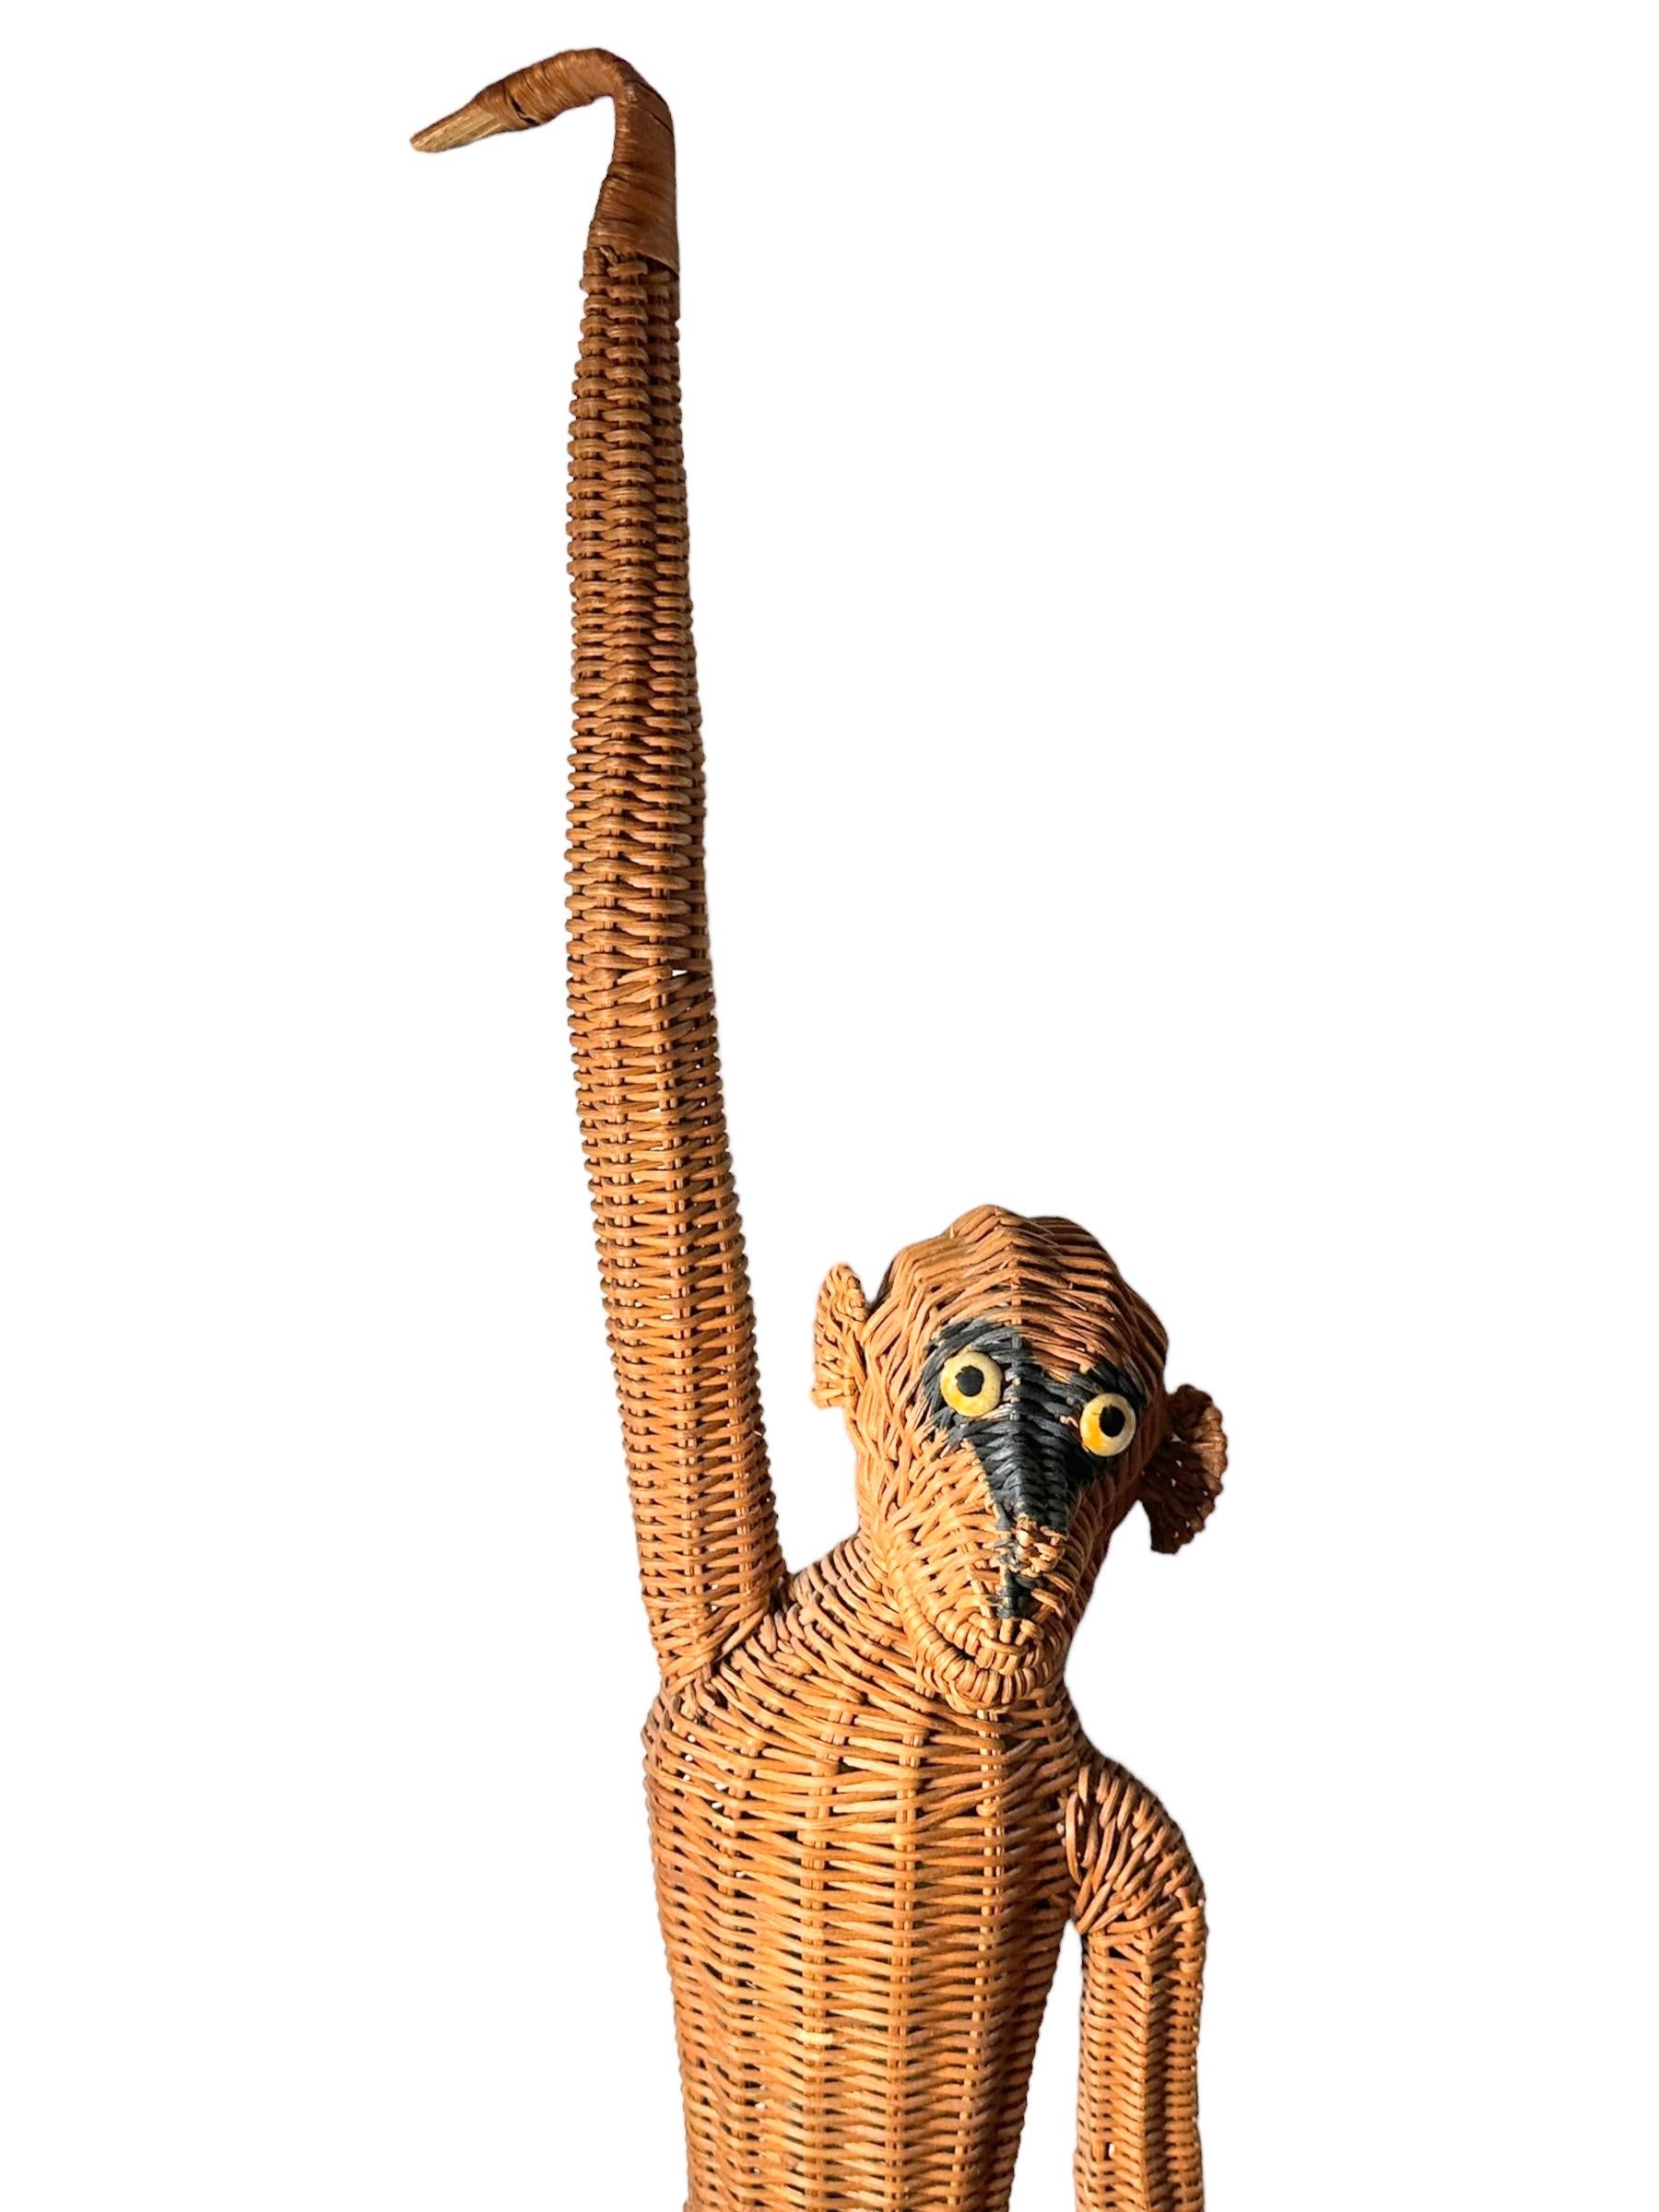 Mid-Century Modern Monkey Ape Rattan Wicker Hanging Figure 1970s, France For Sale 7